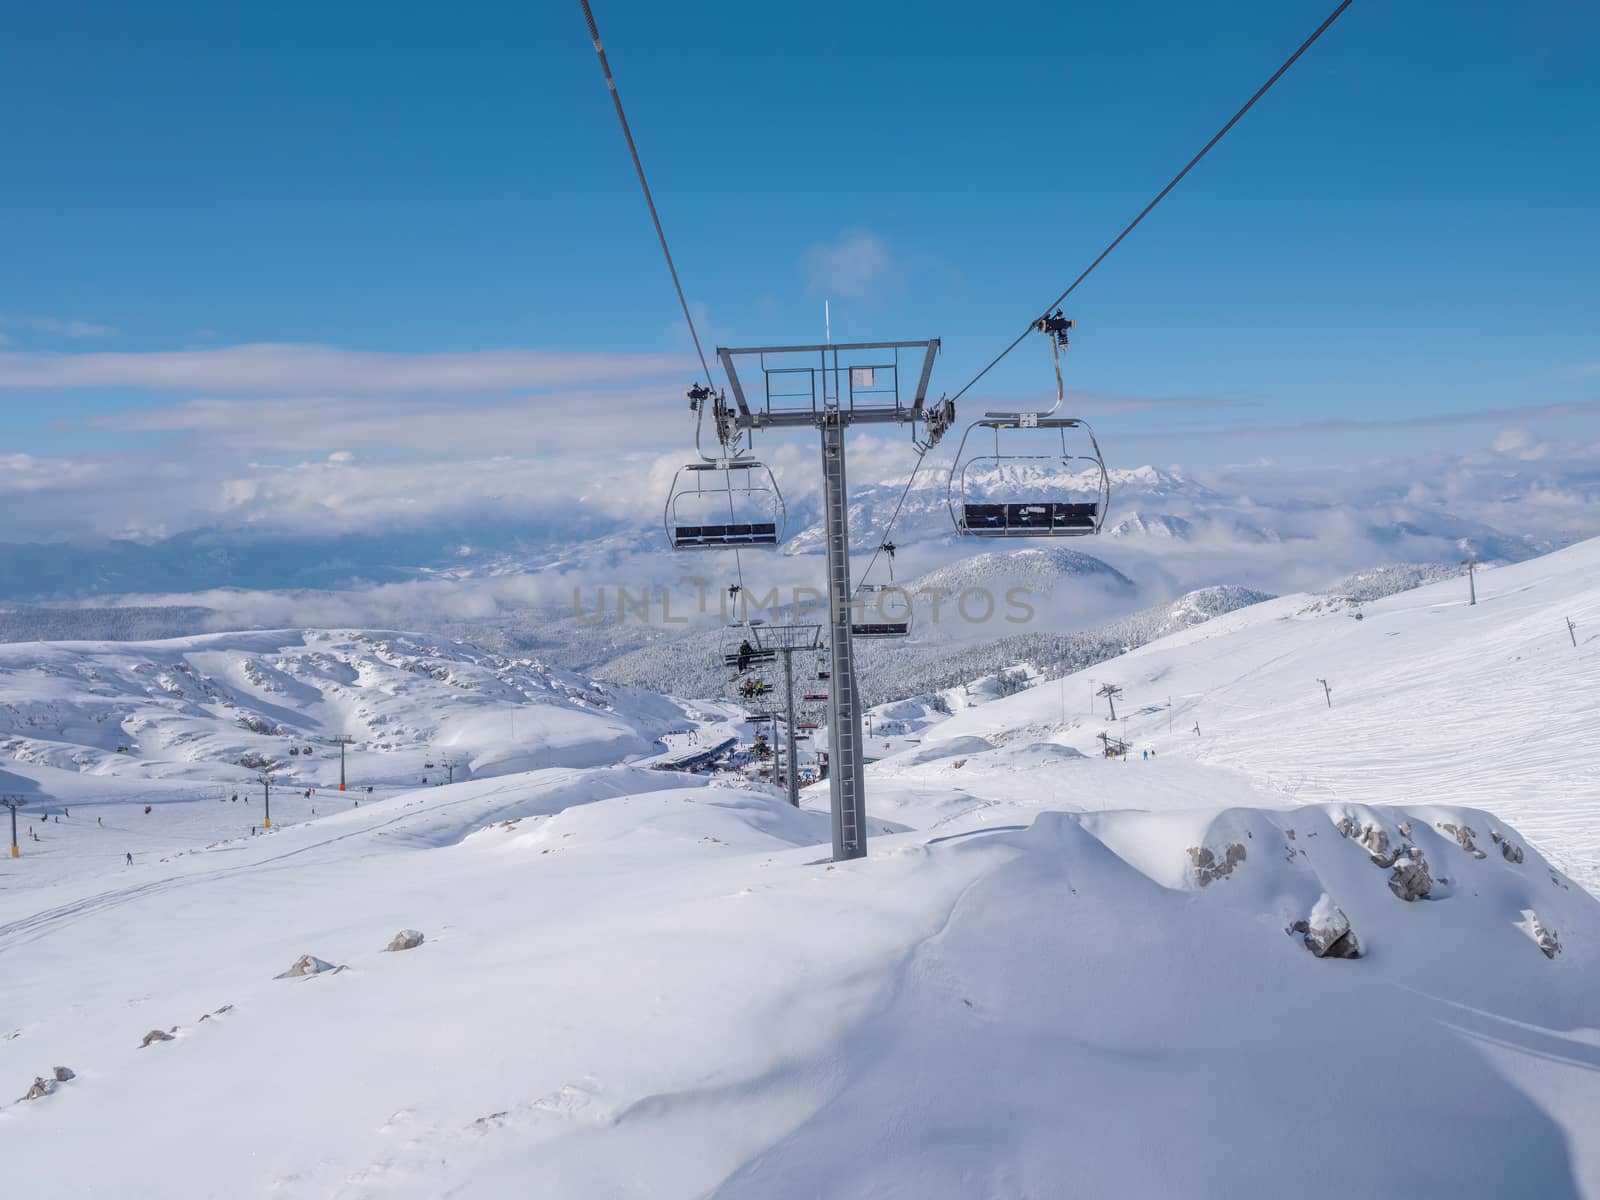 Ski lift on the slope of Parnassos ski resort in Greece